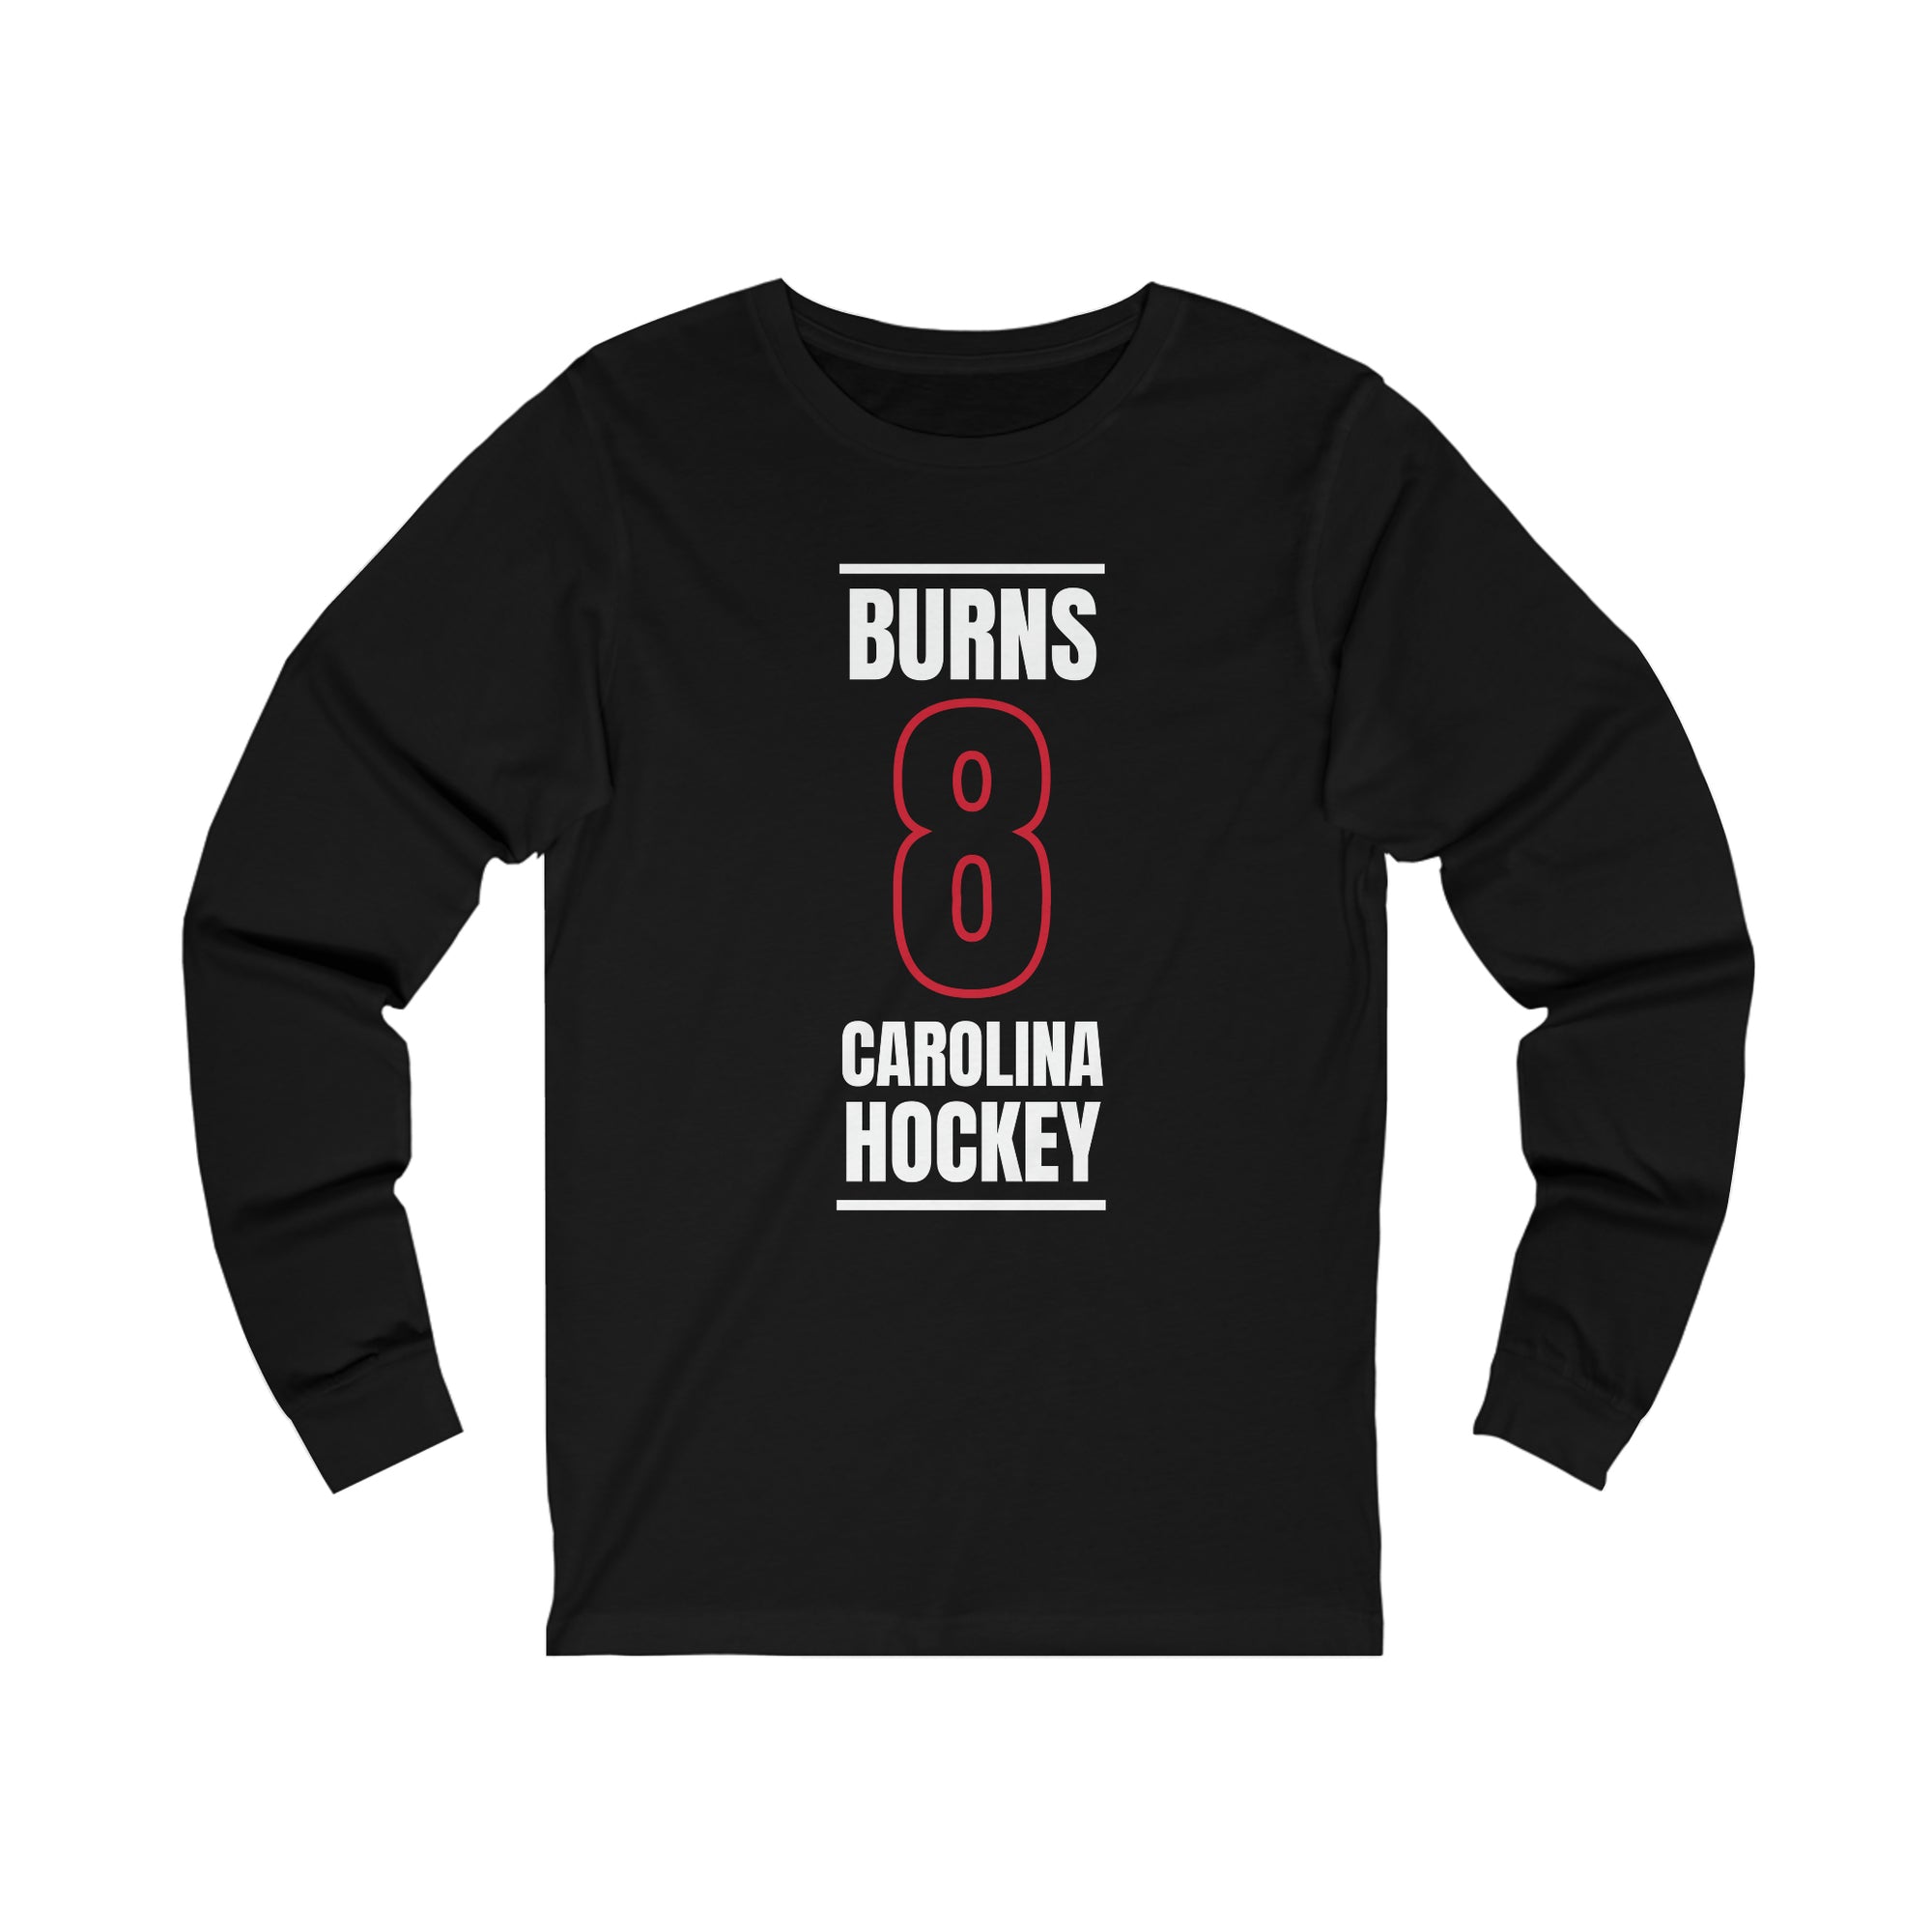 Burns 8 Carolina Hockey Black Vertical Design Unisex Jersey Long Sleeve Shirt